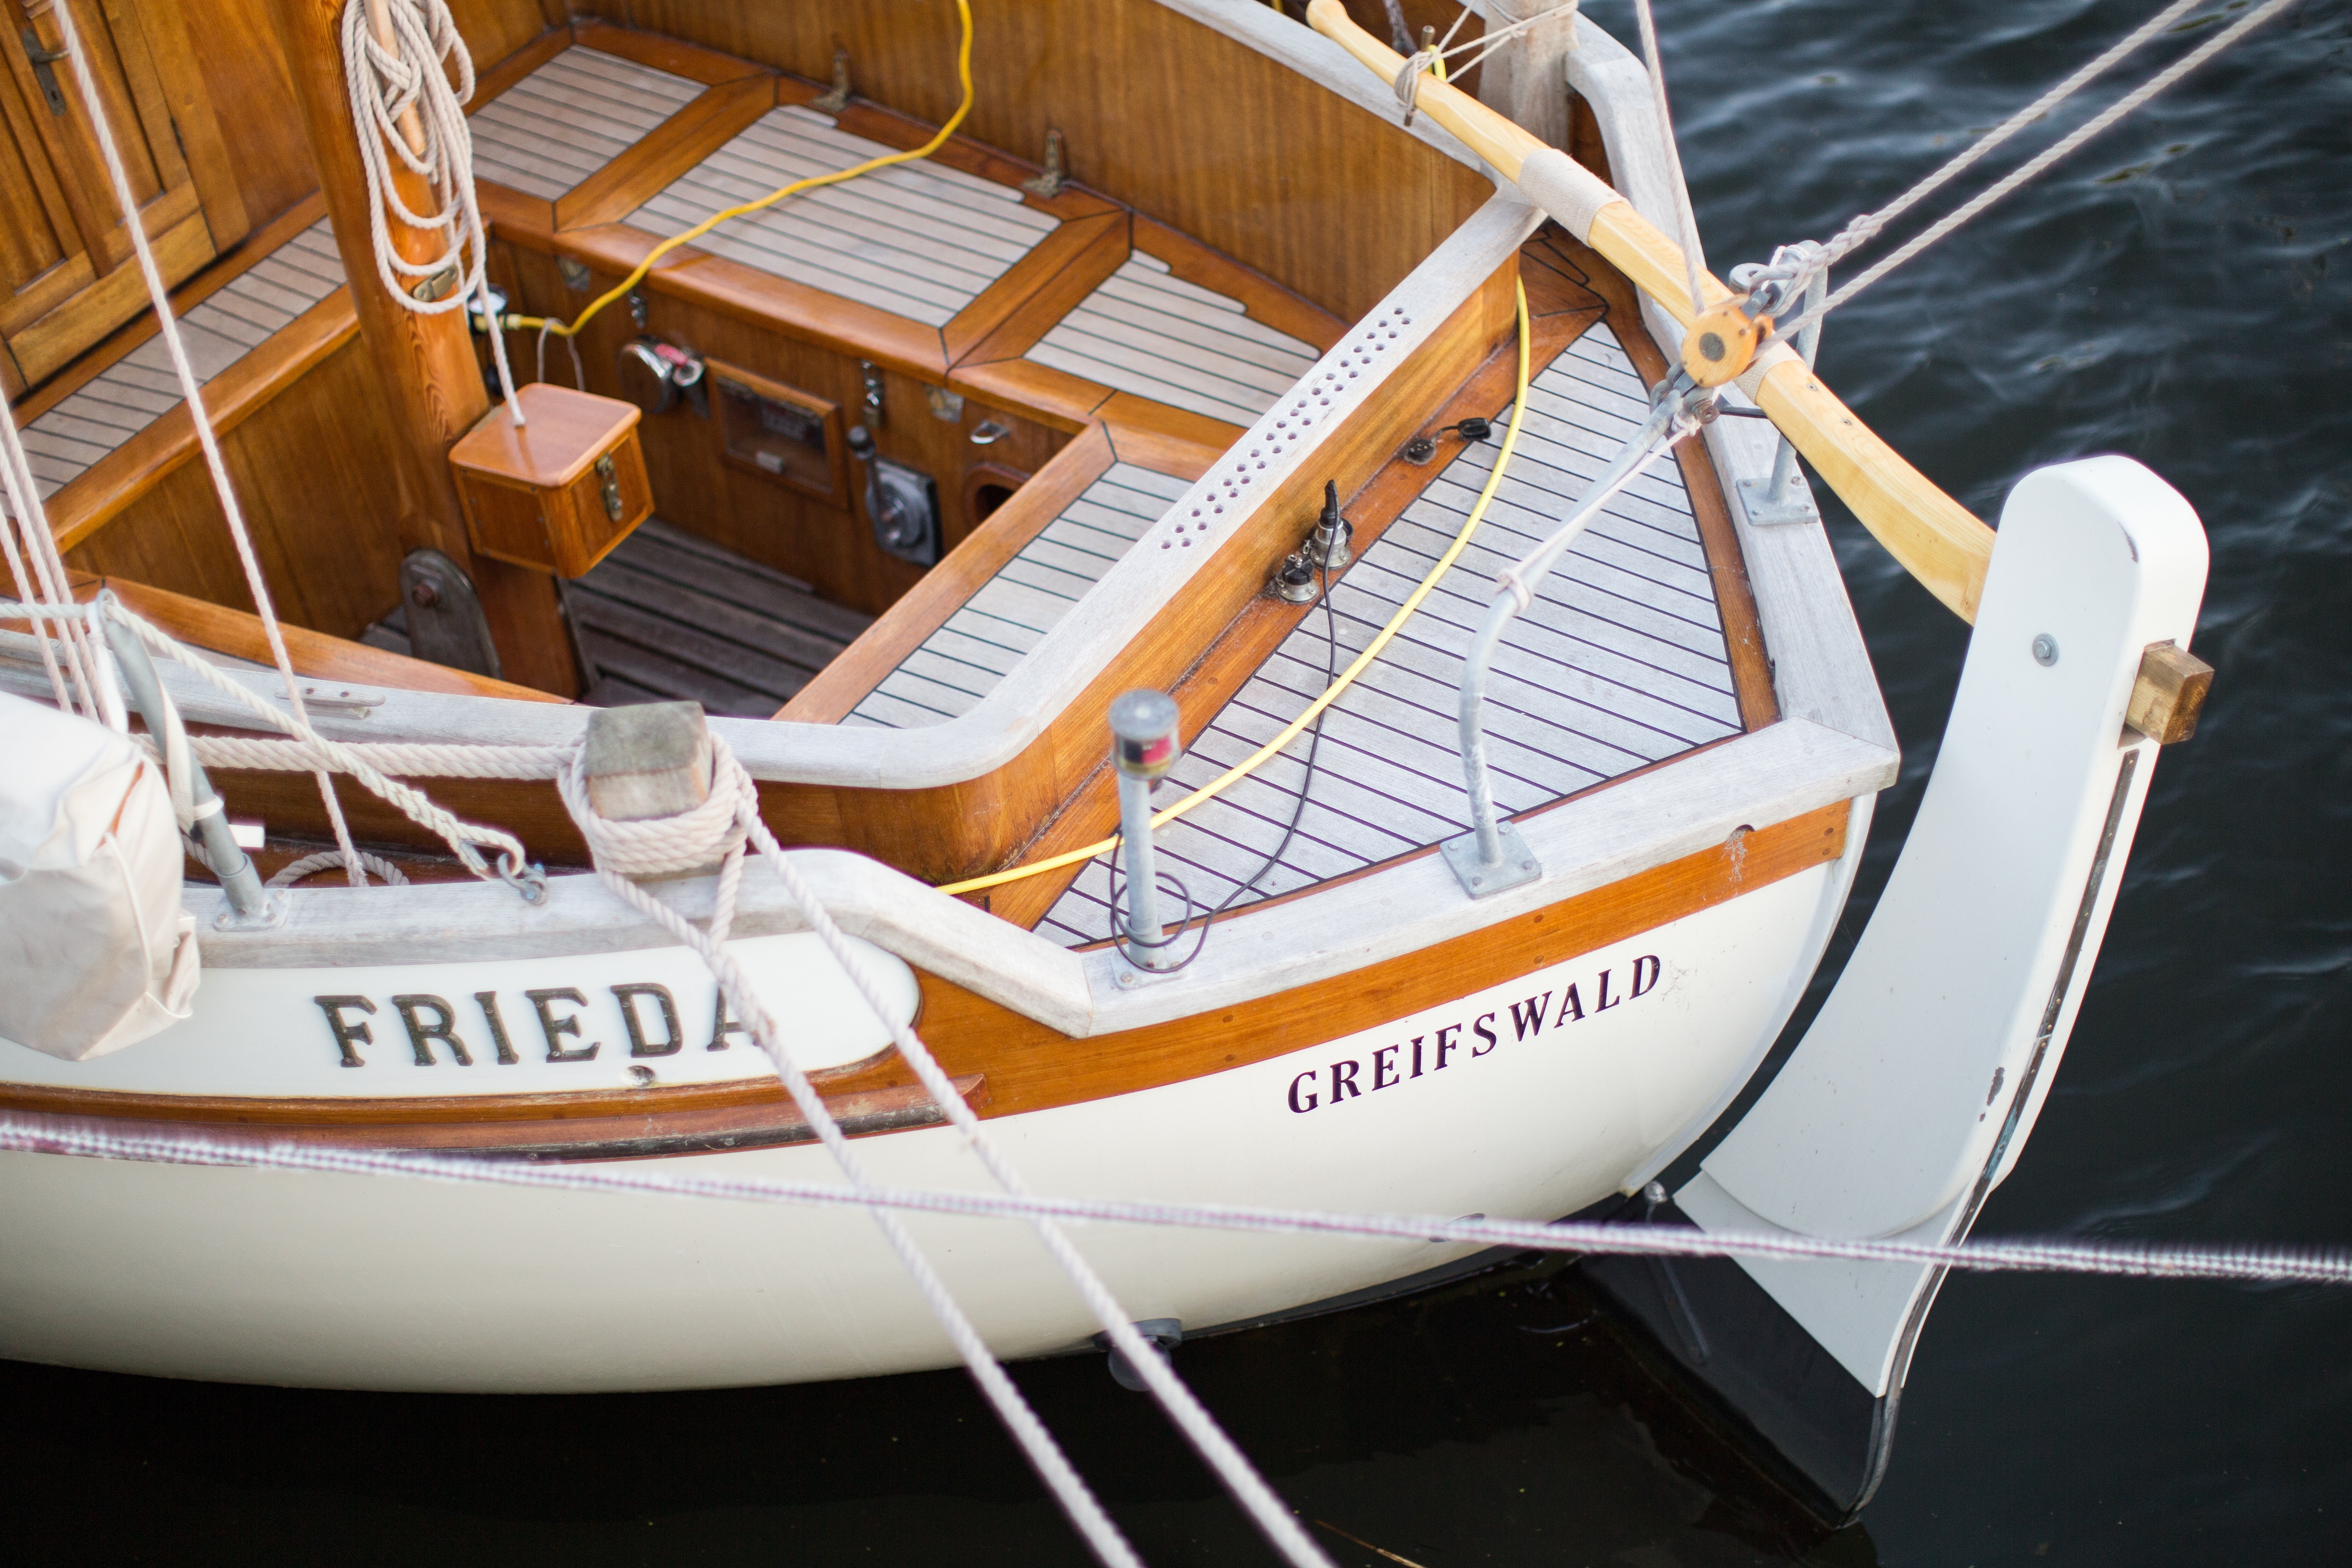 miscellanea, miscellaneous, yacht, vessel, frieda, greifswald mobile wallpaper